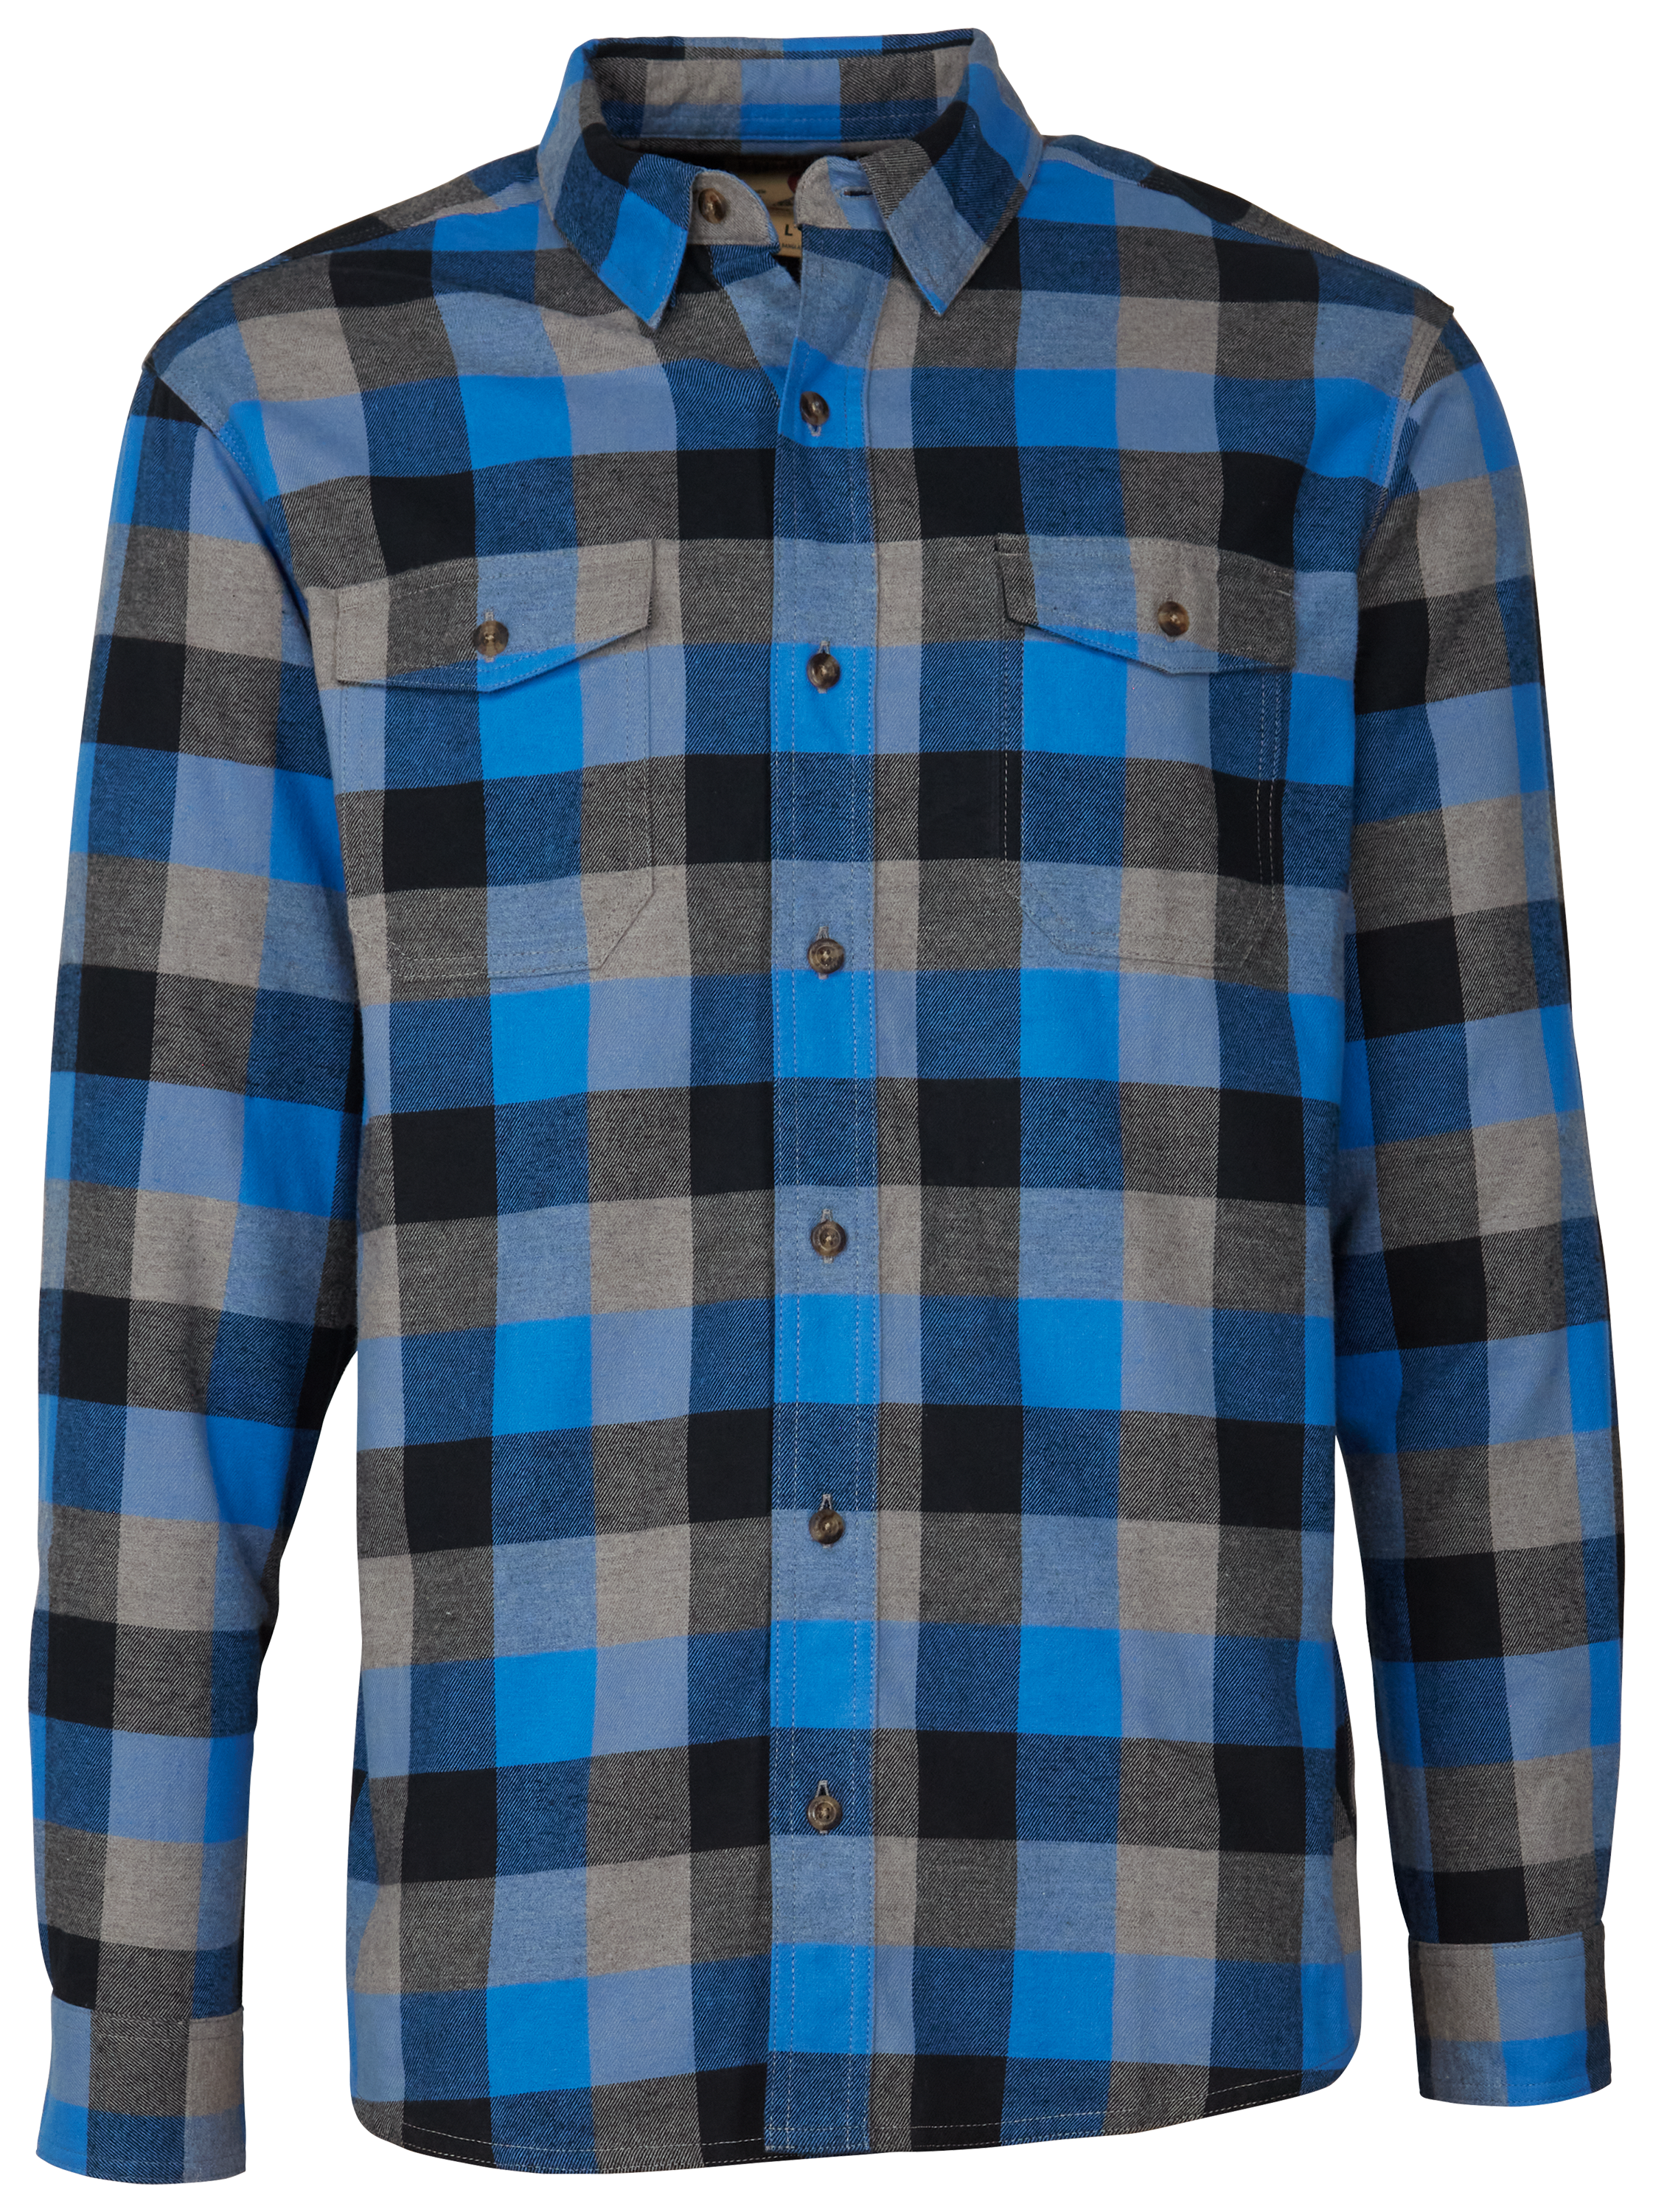 RedHead Buffalo Creek Flannel Long-Sleeve Shirt for Men - Royal/Gray - M